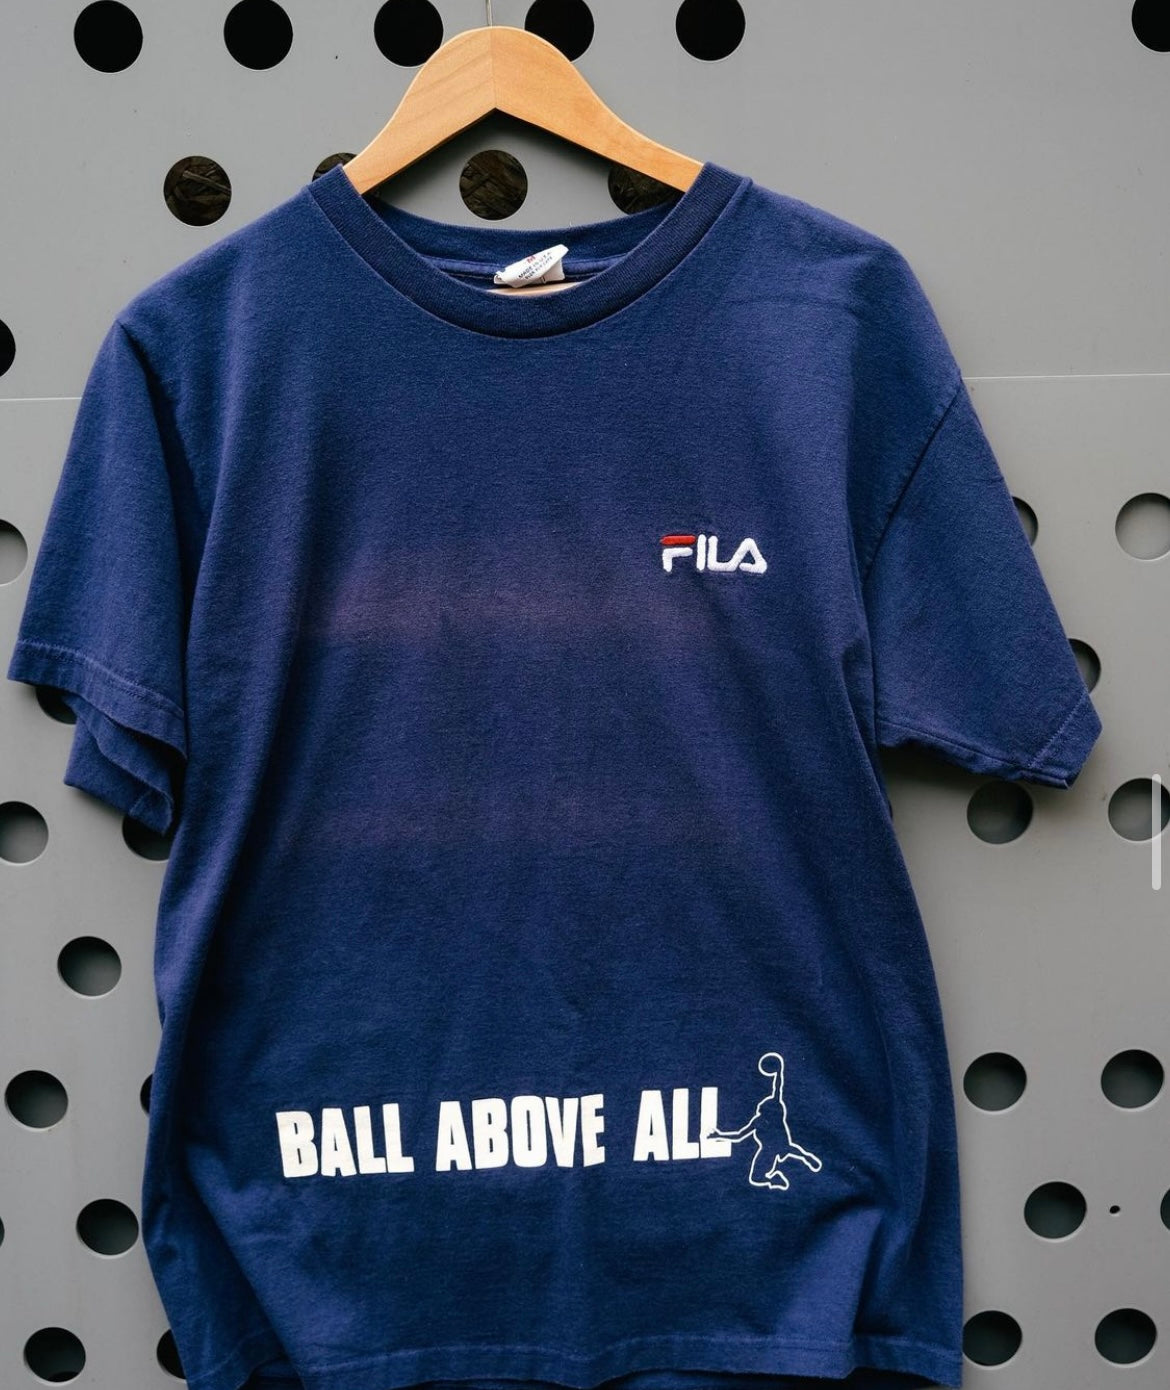 FILA x So So Def (Ball Above All)